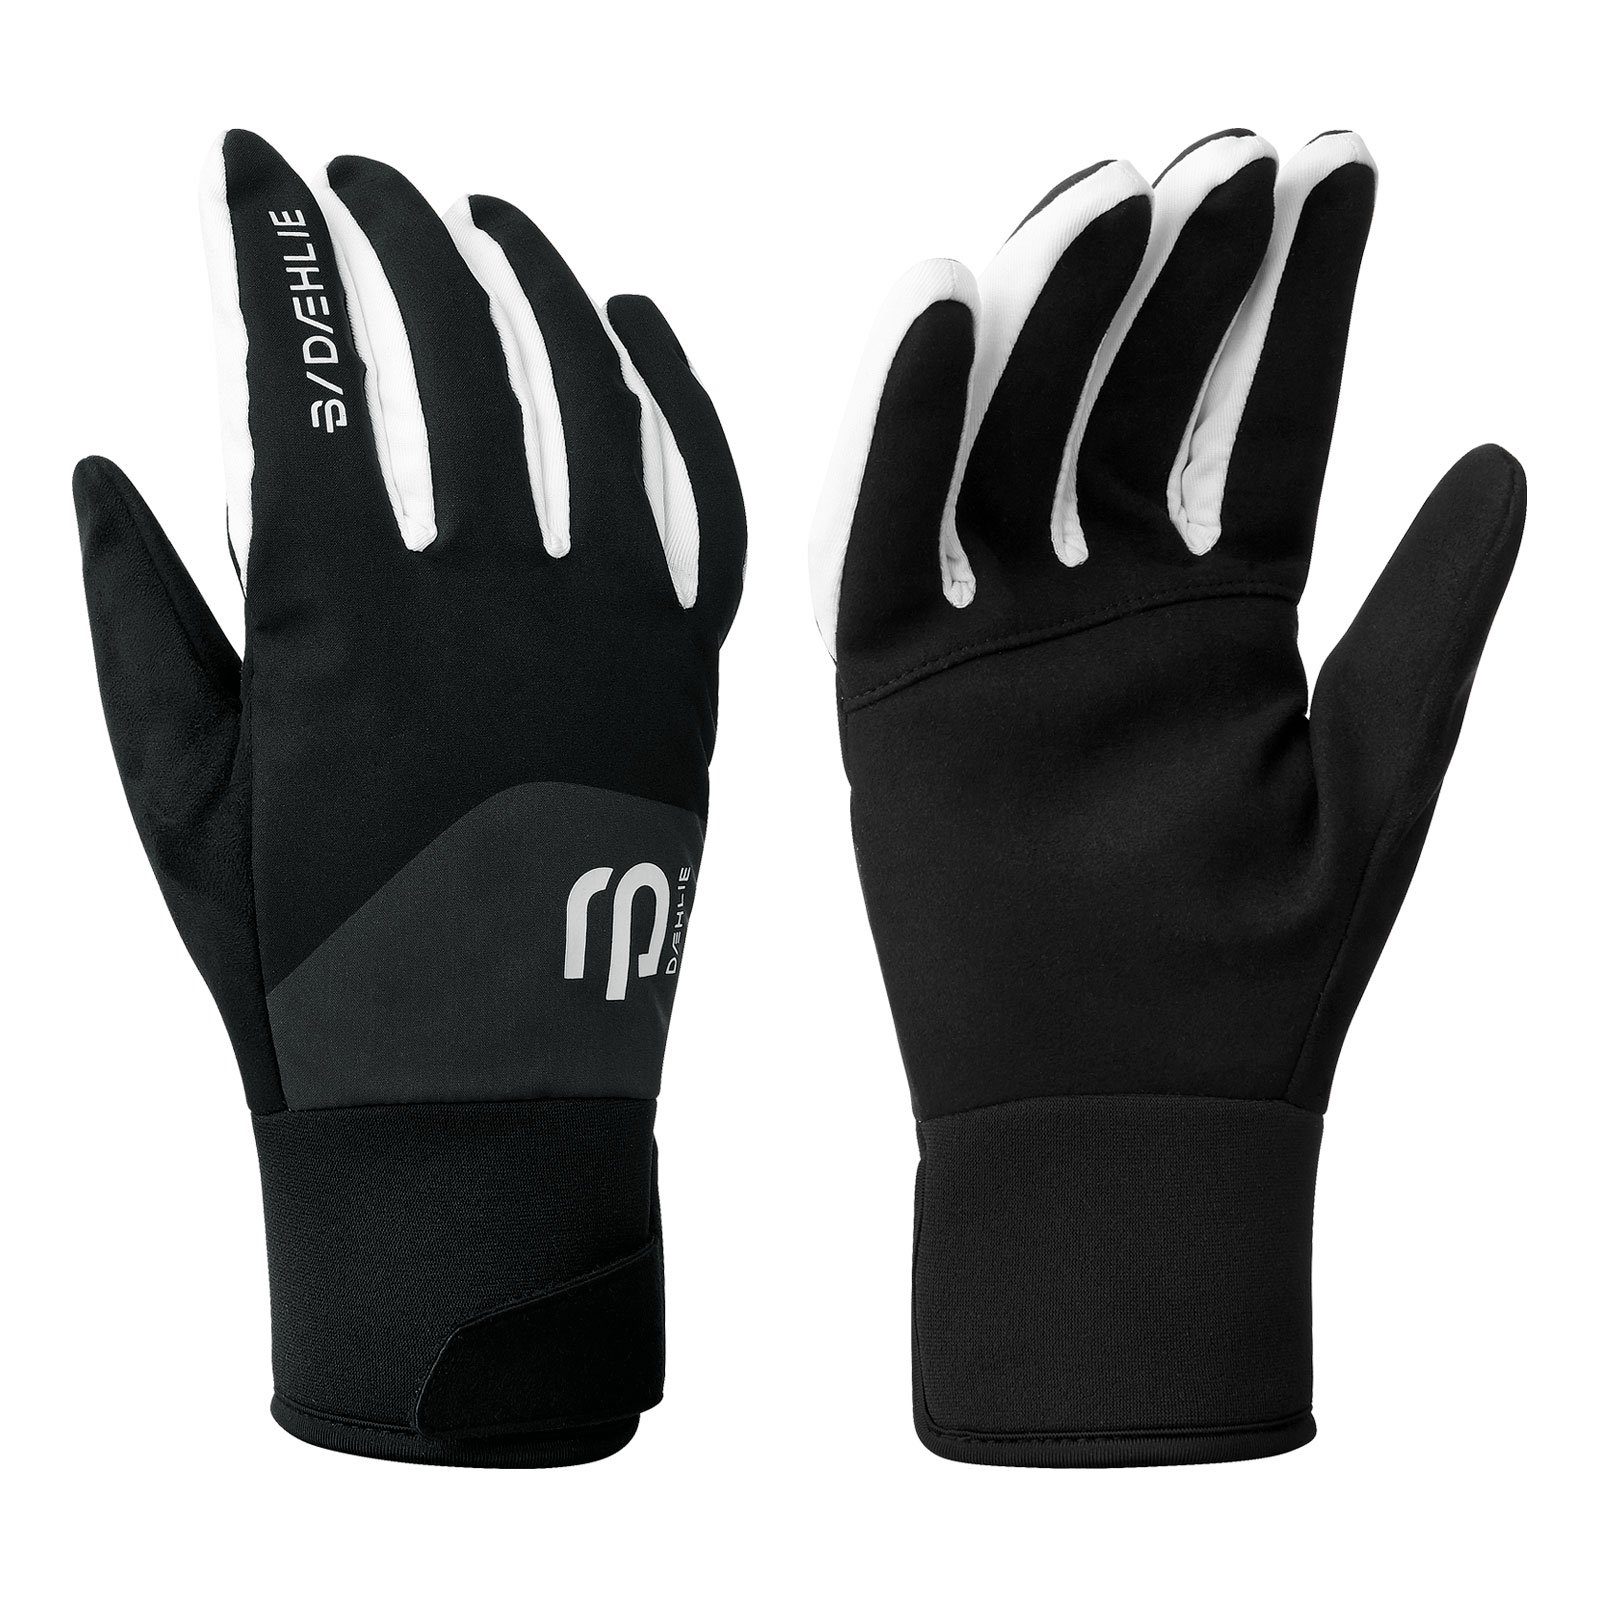 mit Classic Thinsulate™ Langlaufhandschuhe 3M Isolierung 99900 DAEHLIE 2.0 Glove black